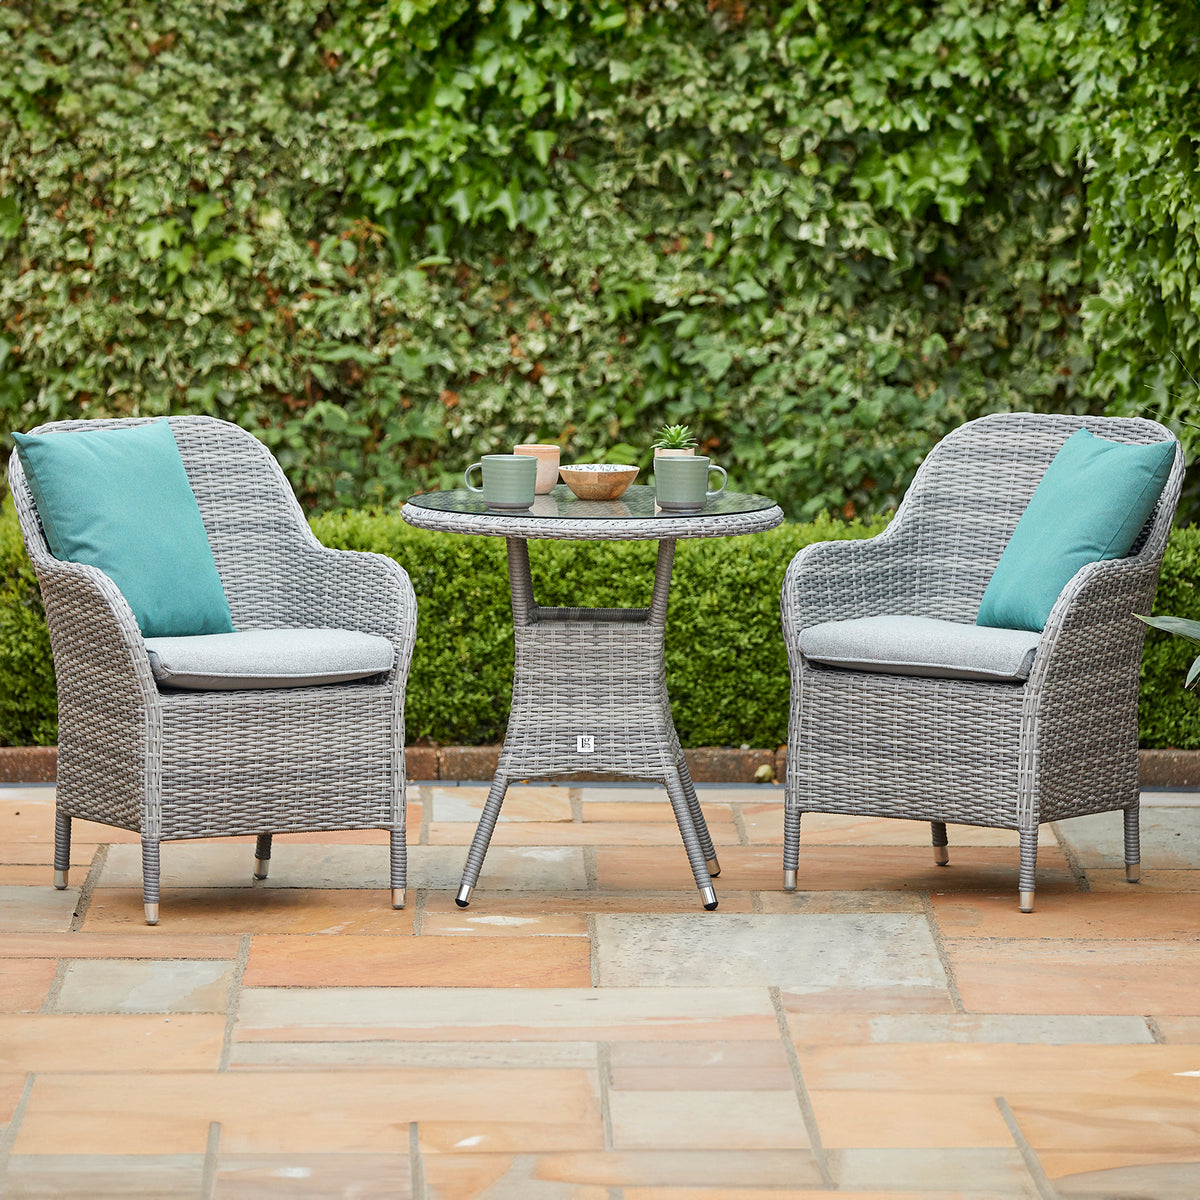 LG Outdoor Monte Carlo Stone Rattan Weave Bistro Two Seat Garden Furniture Set